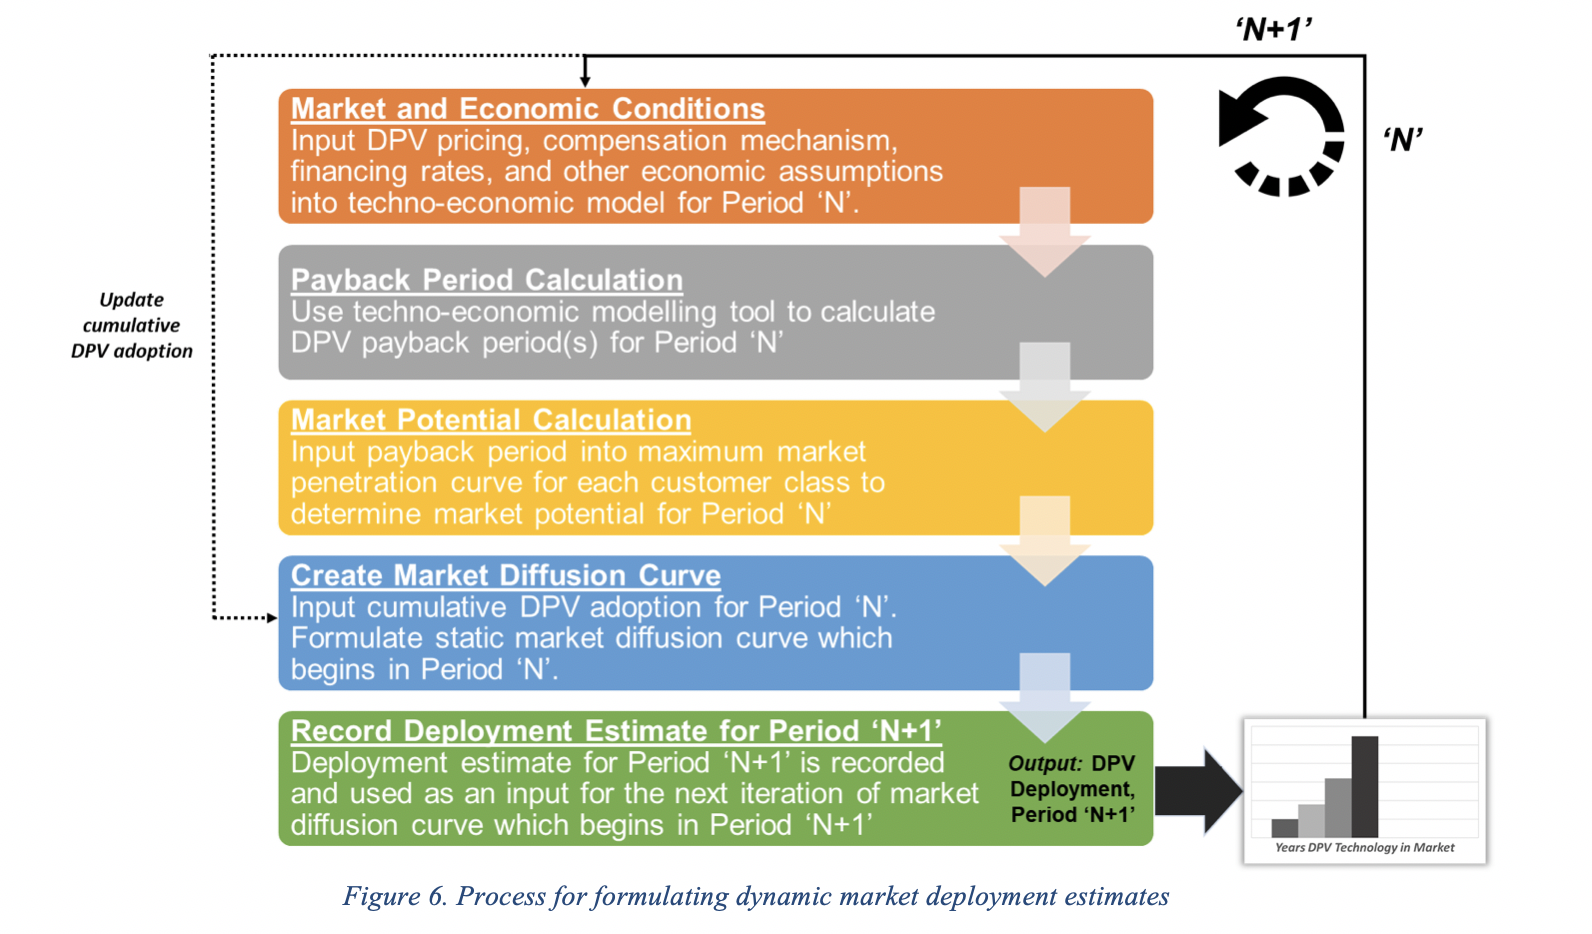 Figure 6. Process for formulating dynamic market deployment estimates